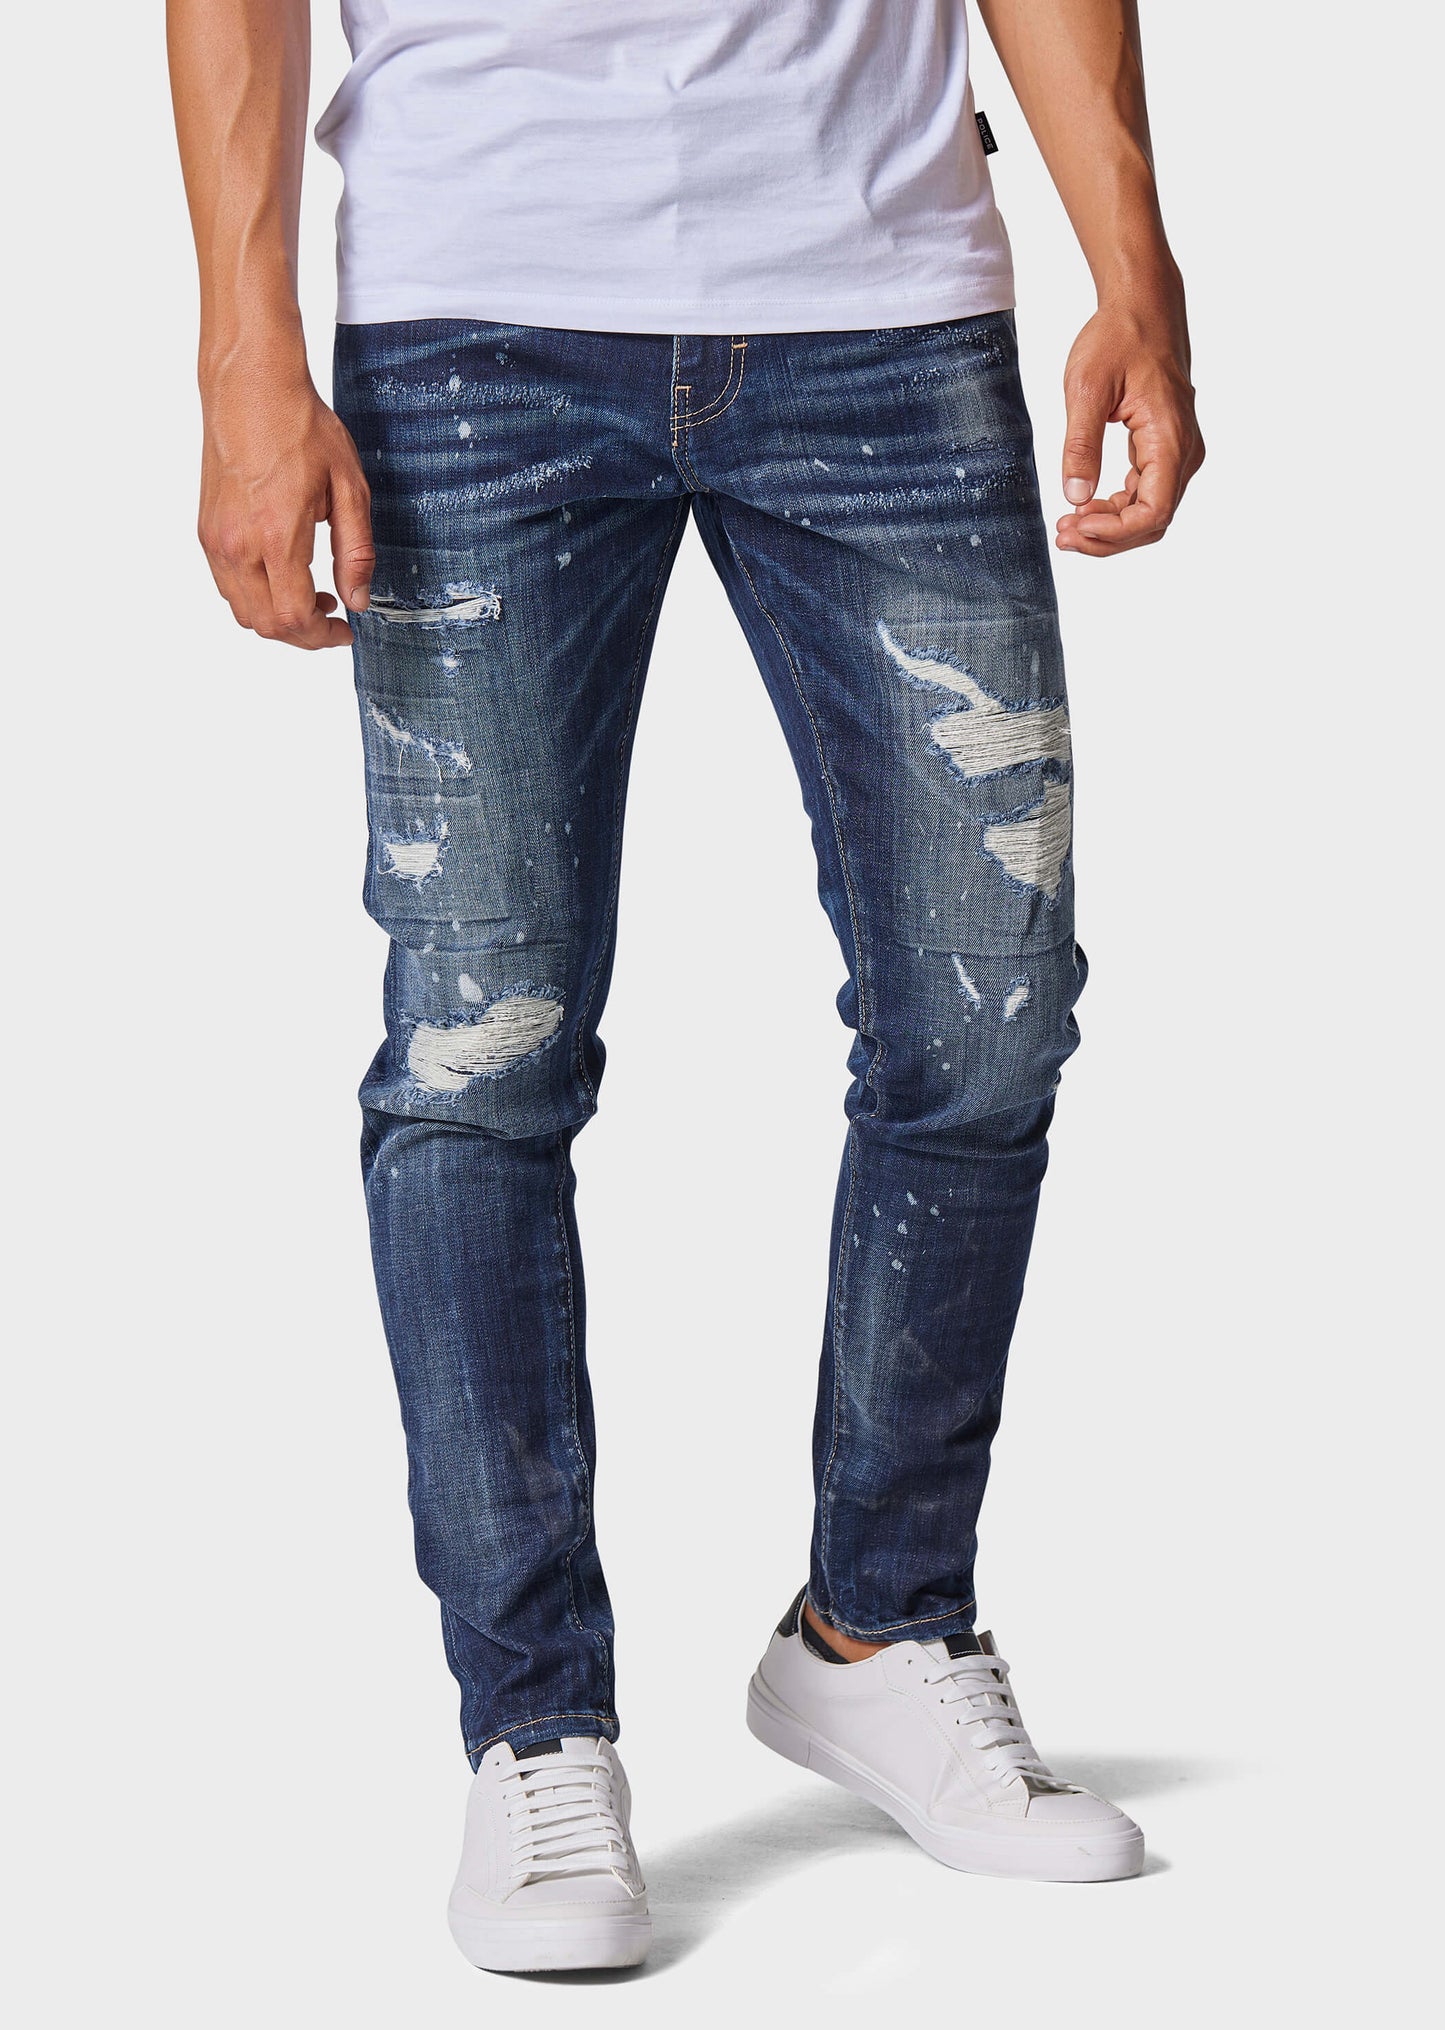 Deniro LAT 884 Slim Fit Jeans